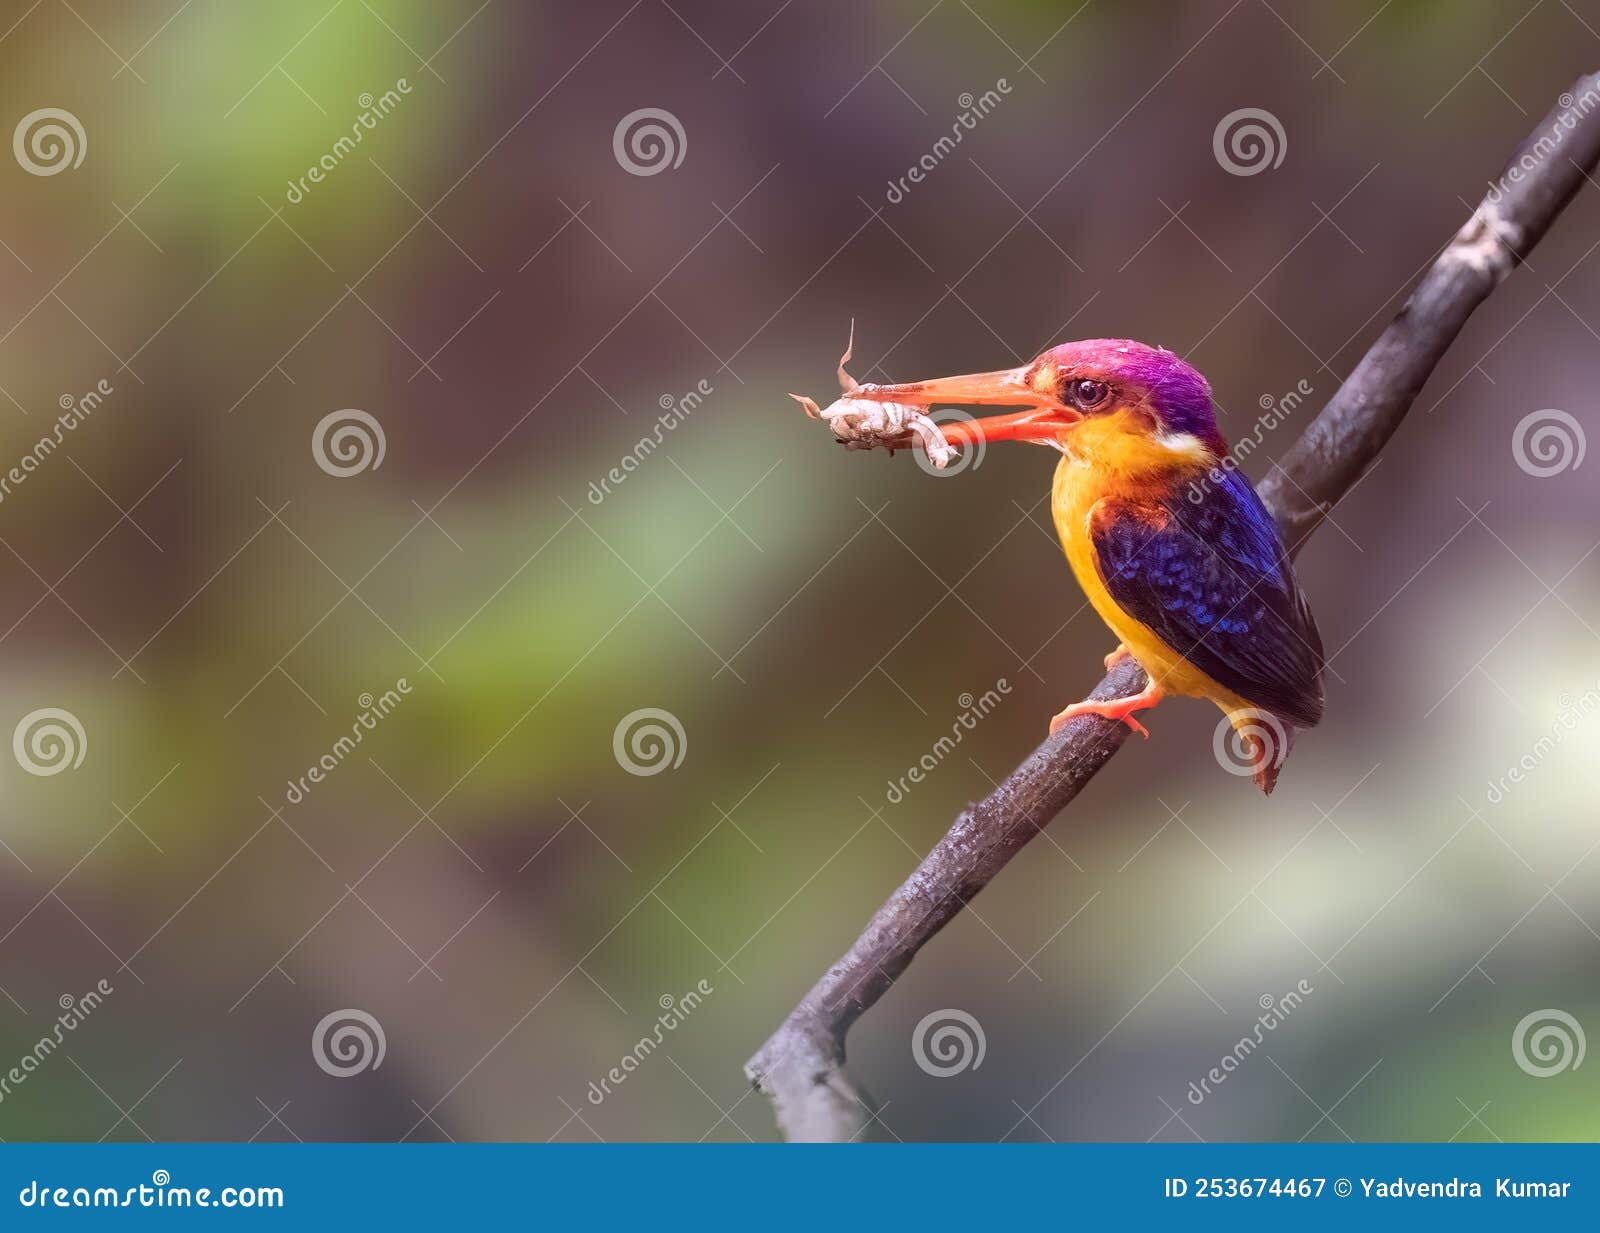 oriental dwarf kingfisher with a kill